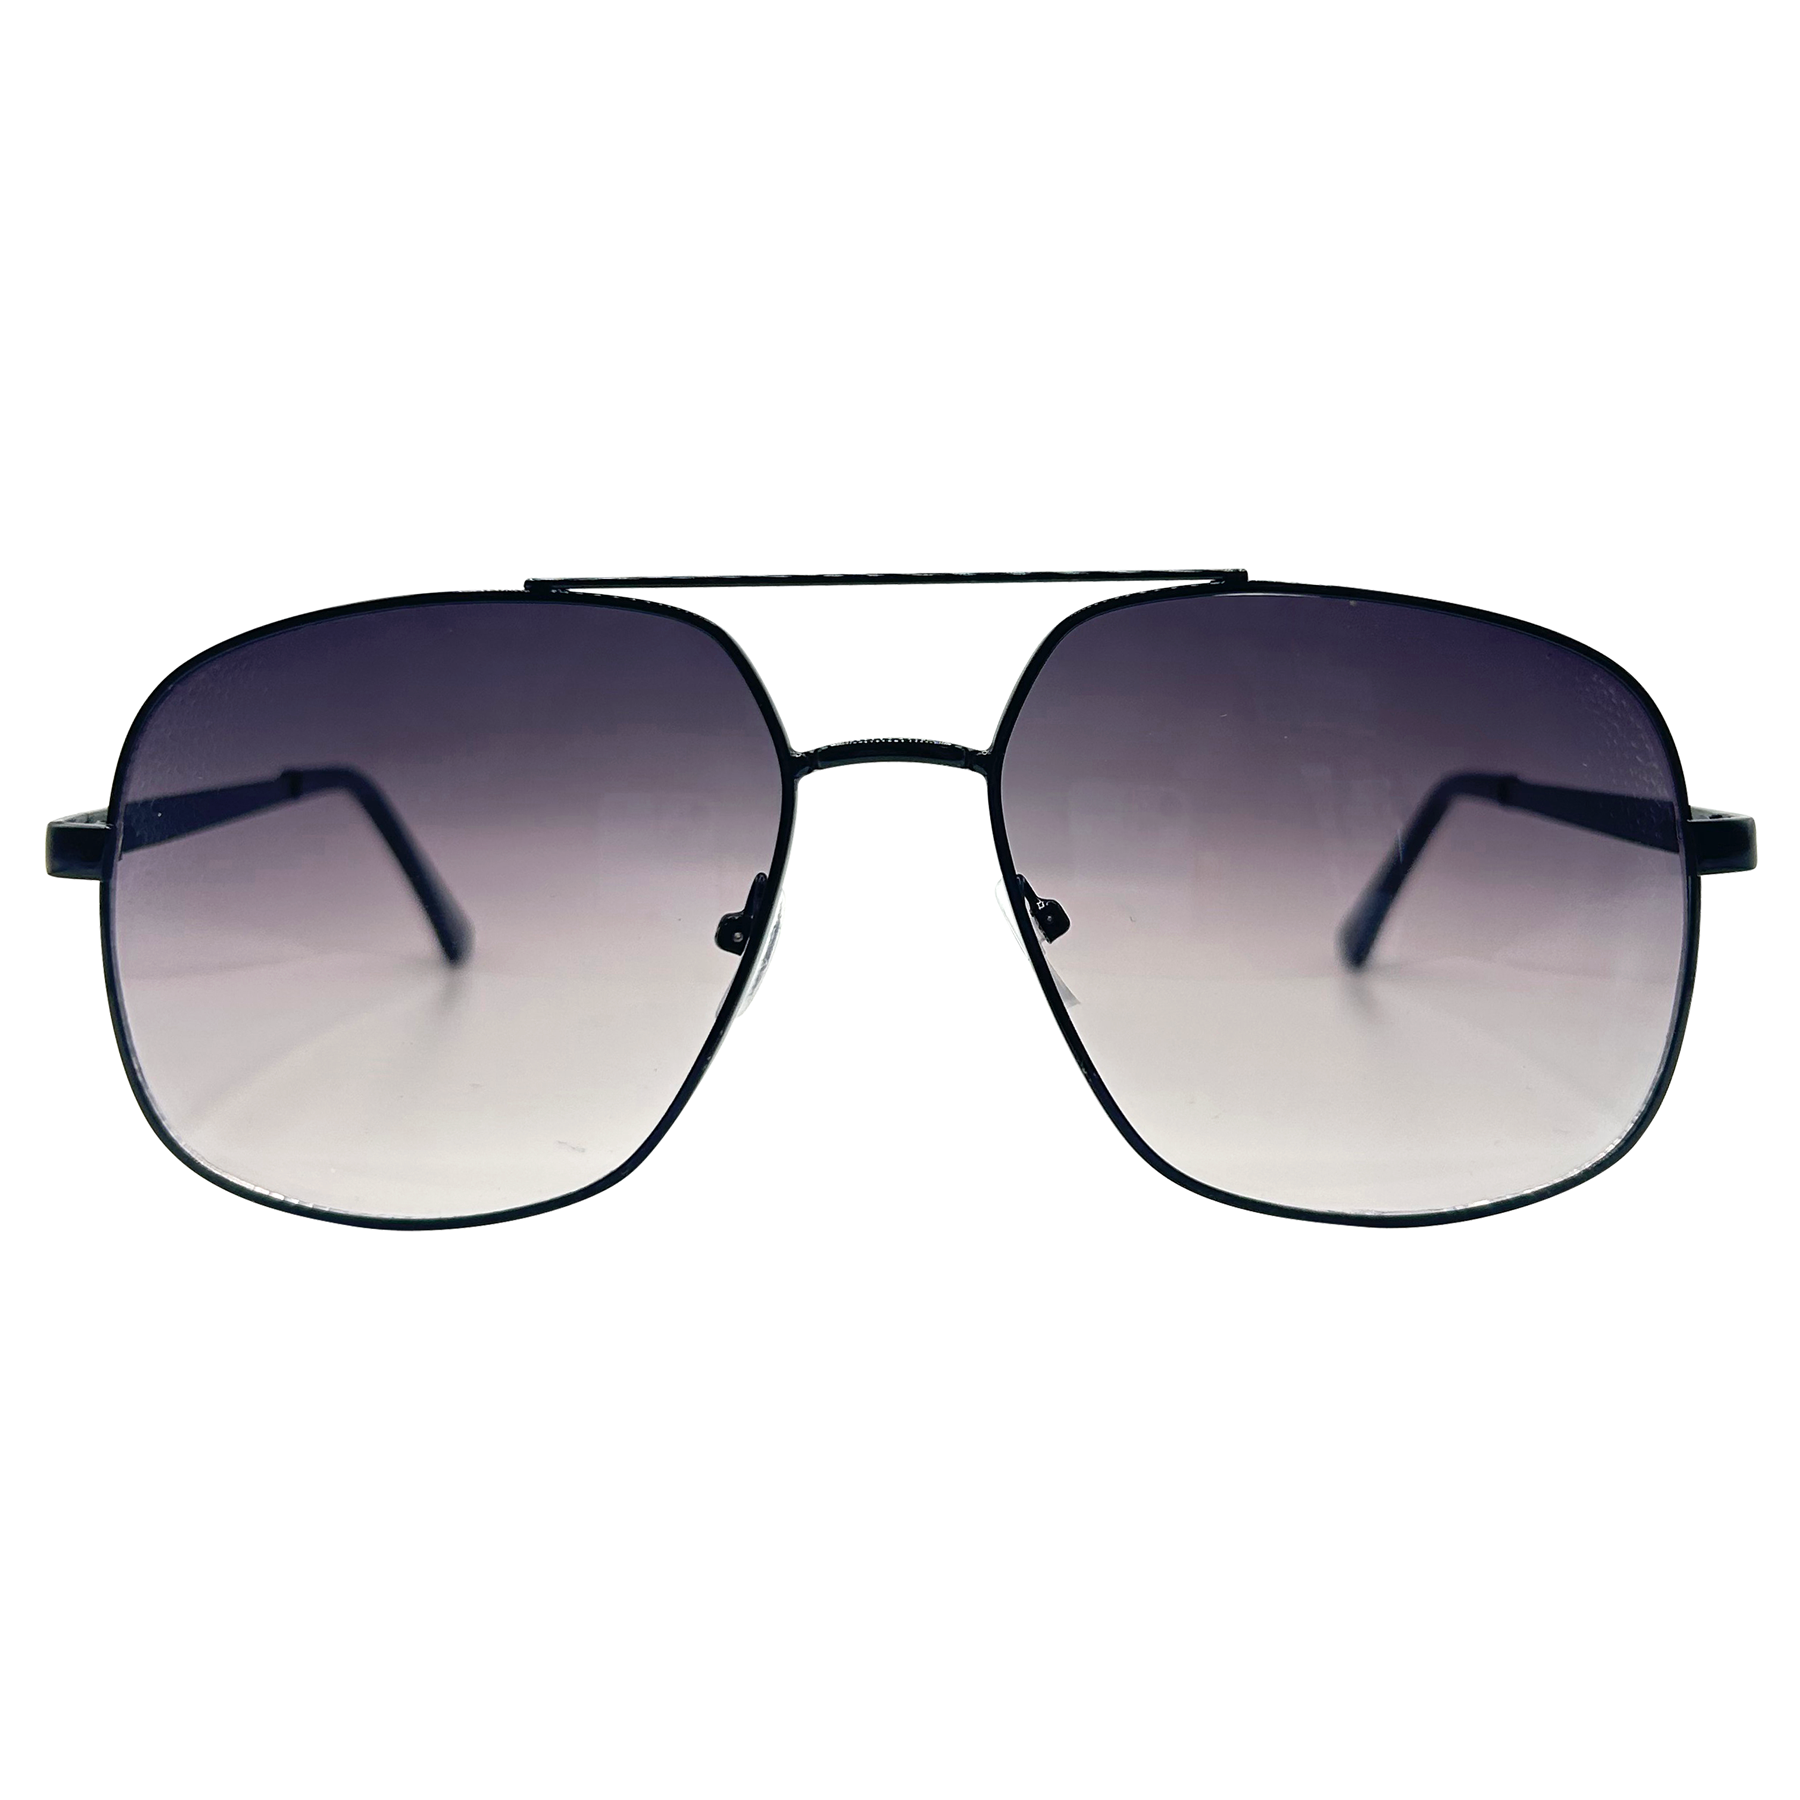 SOAR Retro Square Aviator Sunglasses